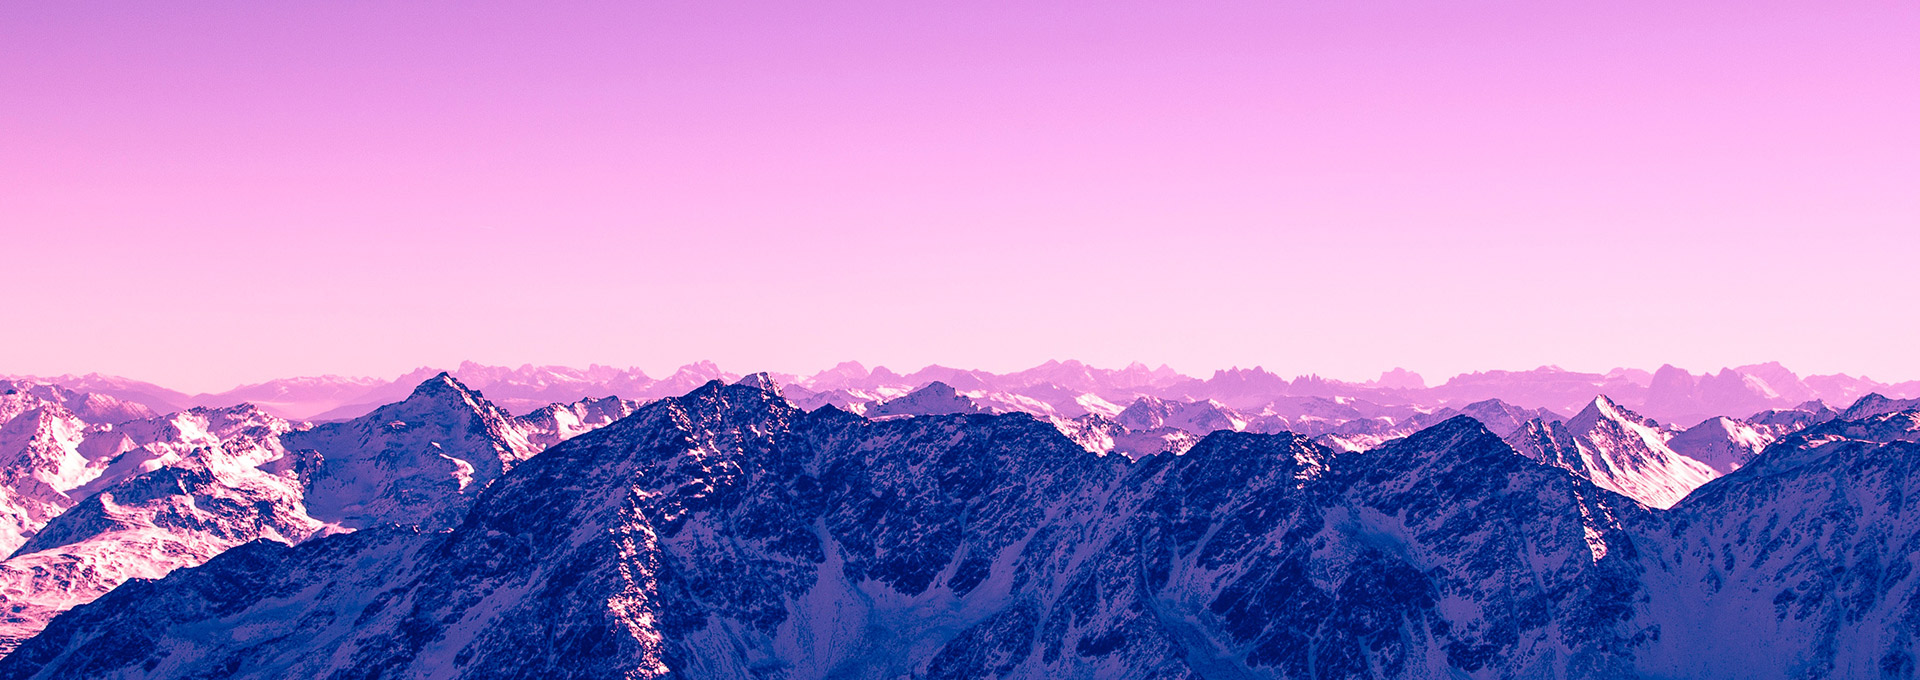 mountain with purple sky